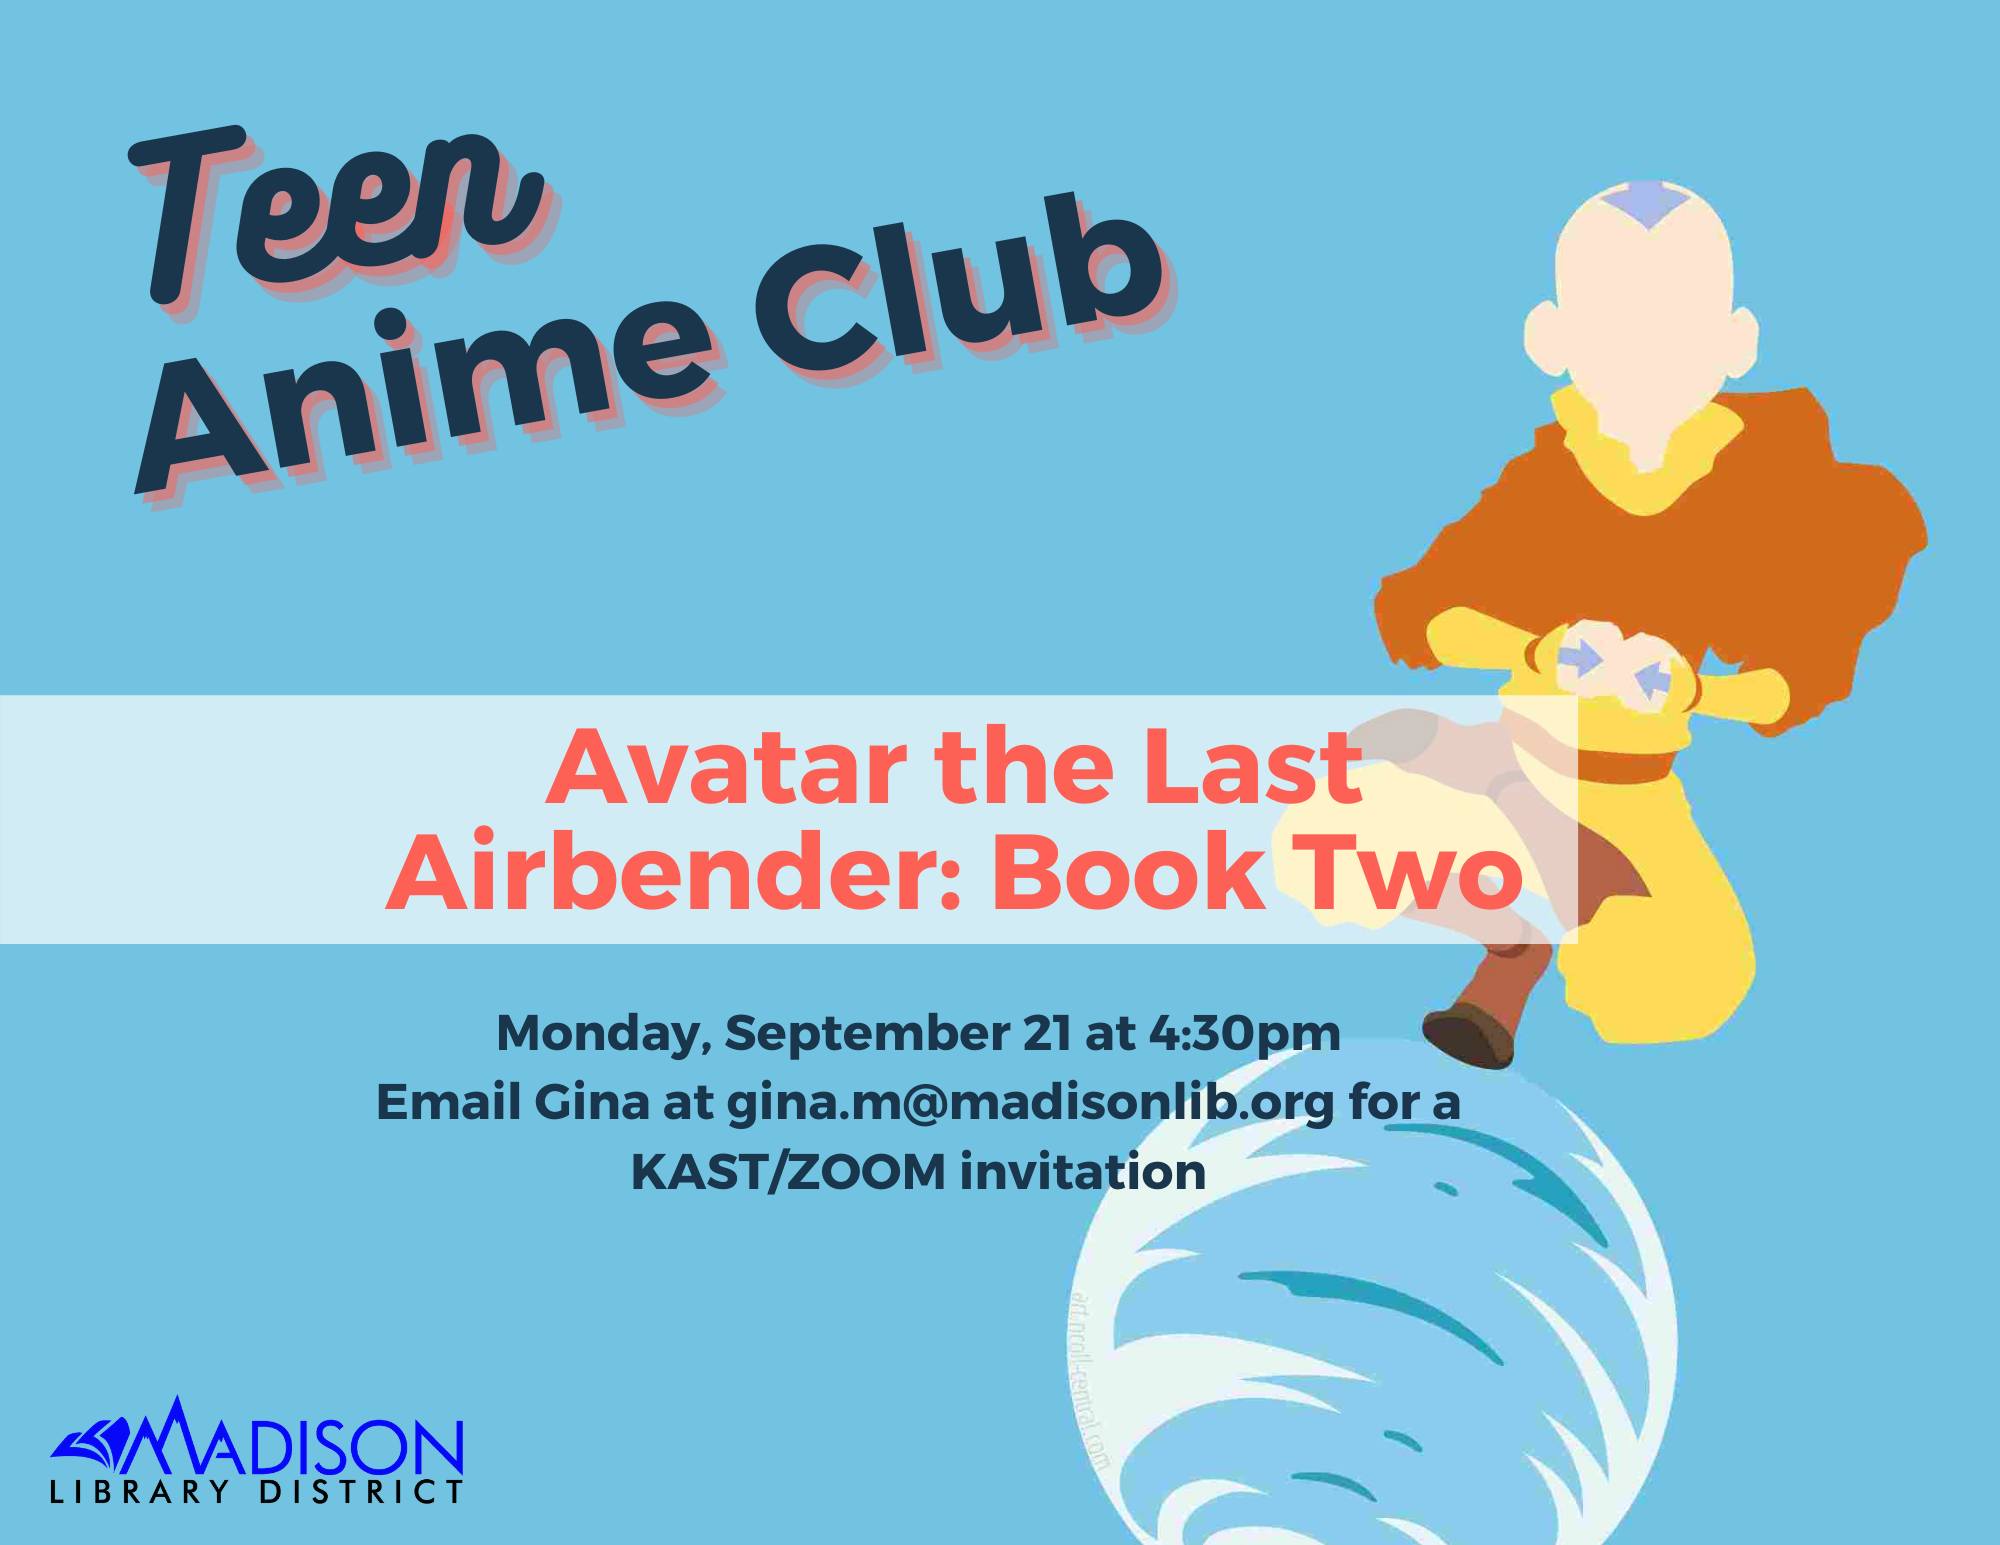 Teen Anime Club Tickets, Multiple Dates